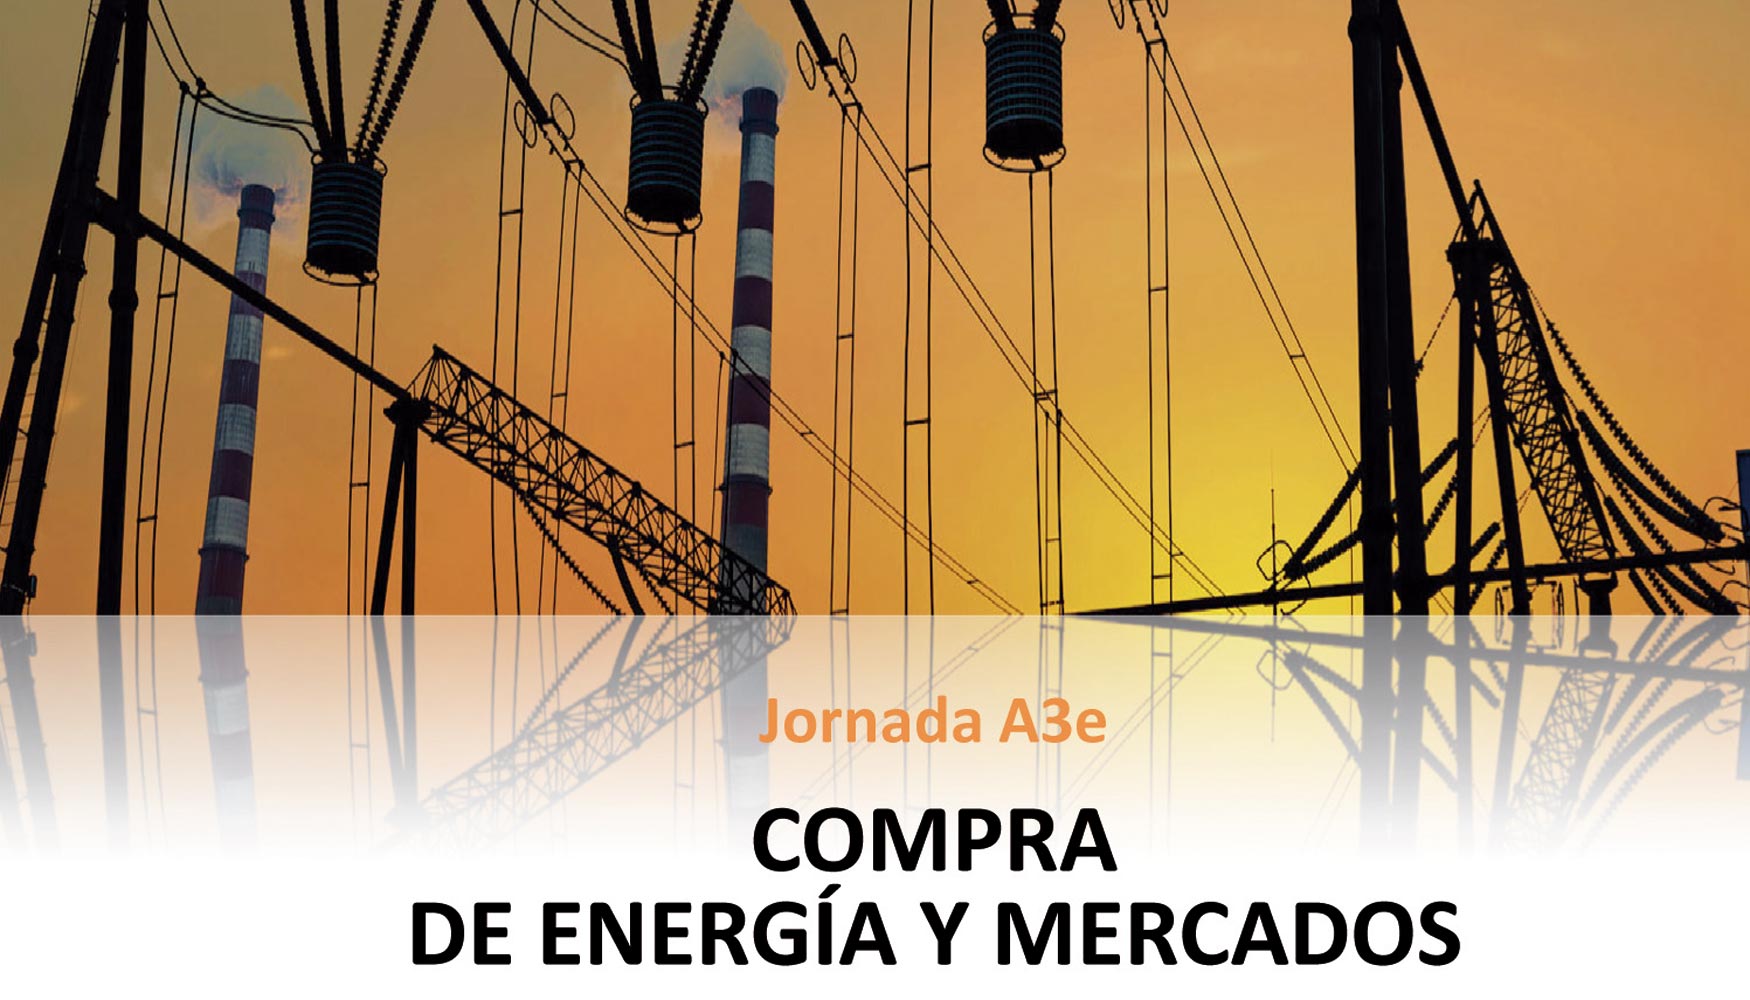 Jornada Compra de Energa y Mercados, organizada por A3e